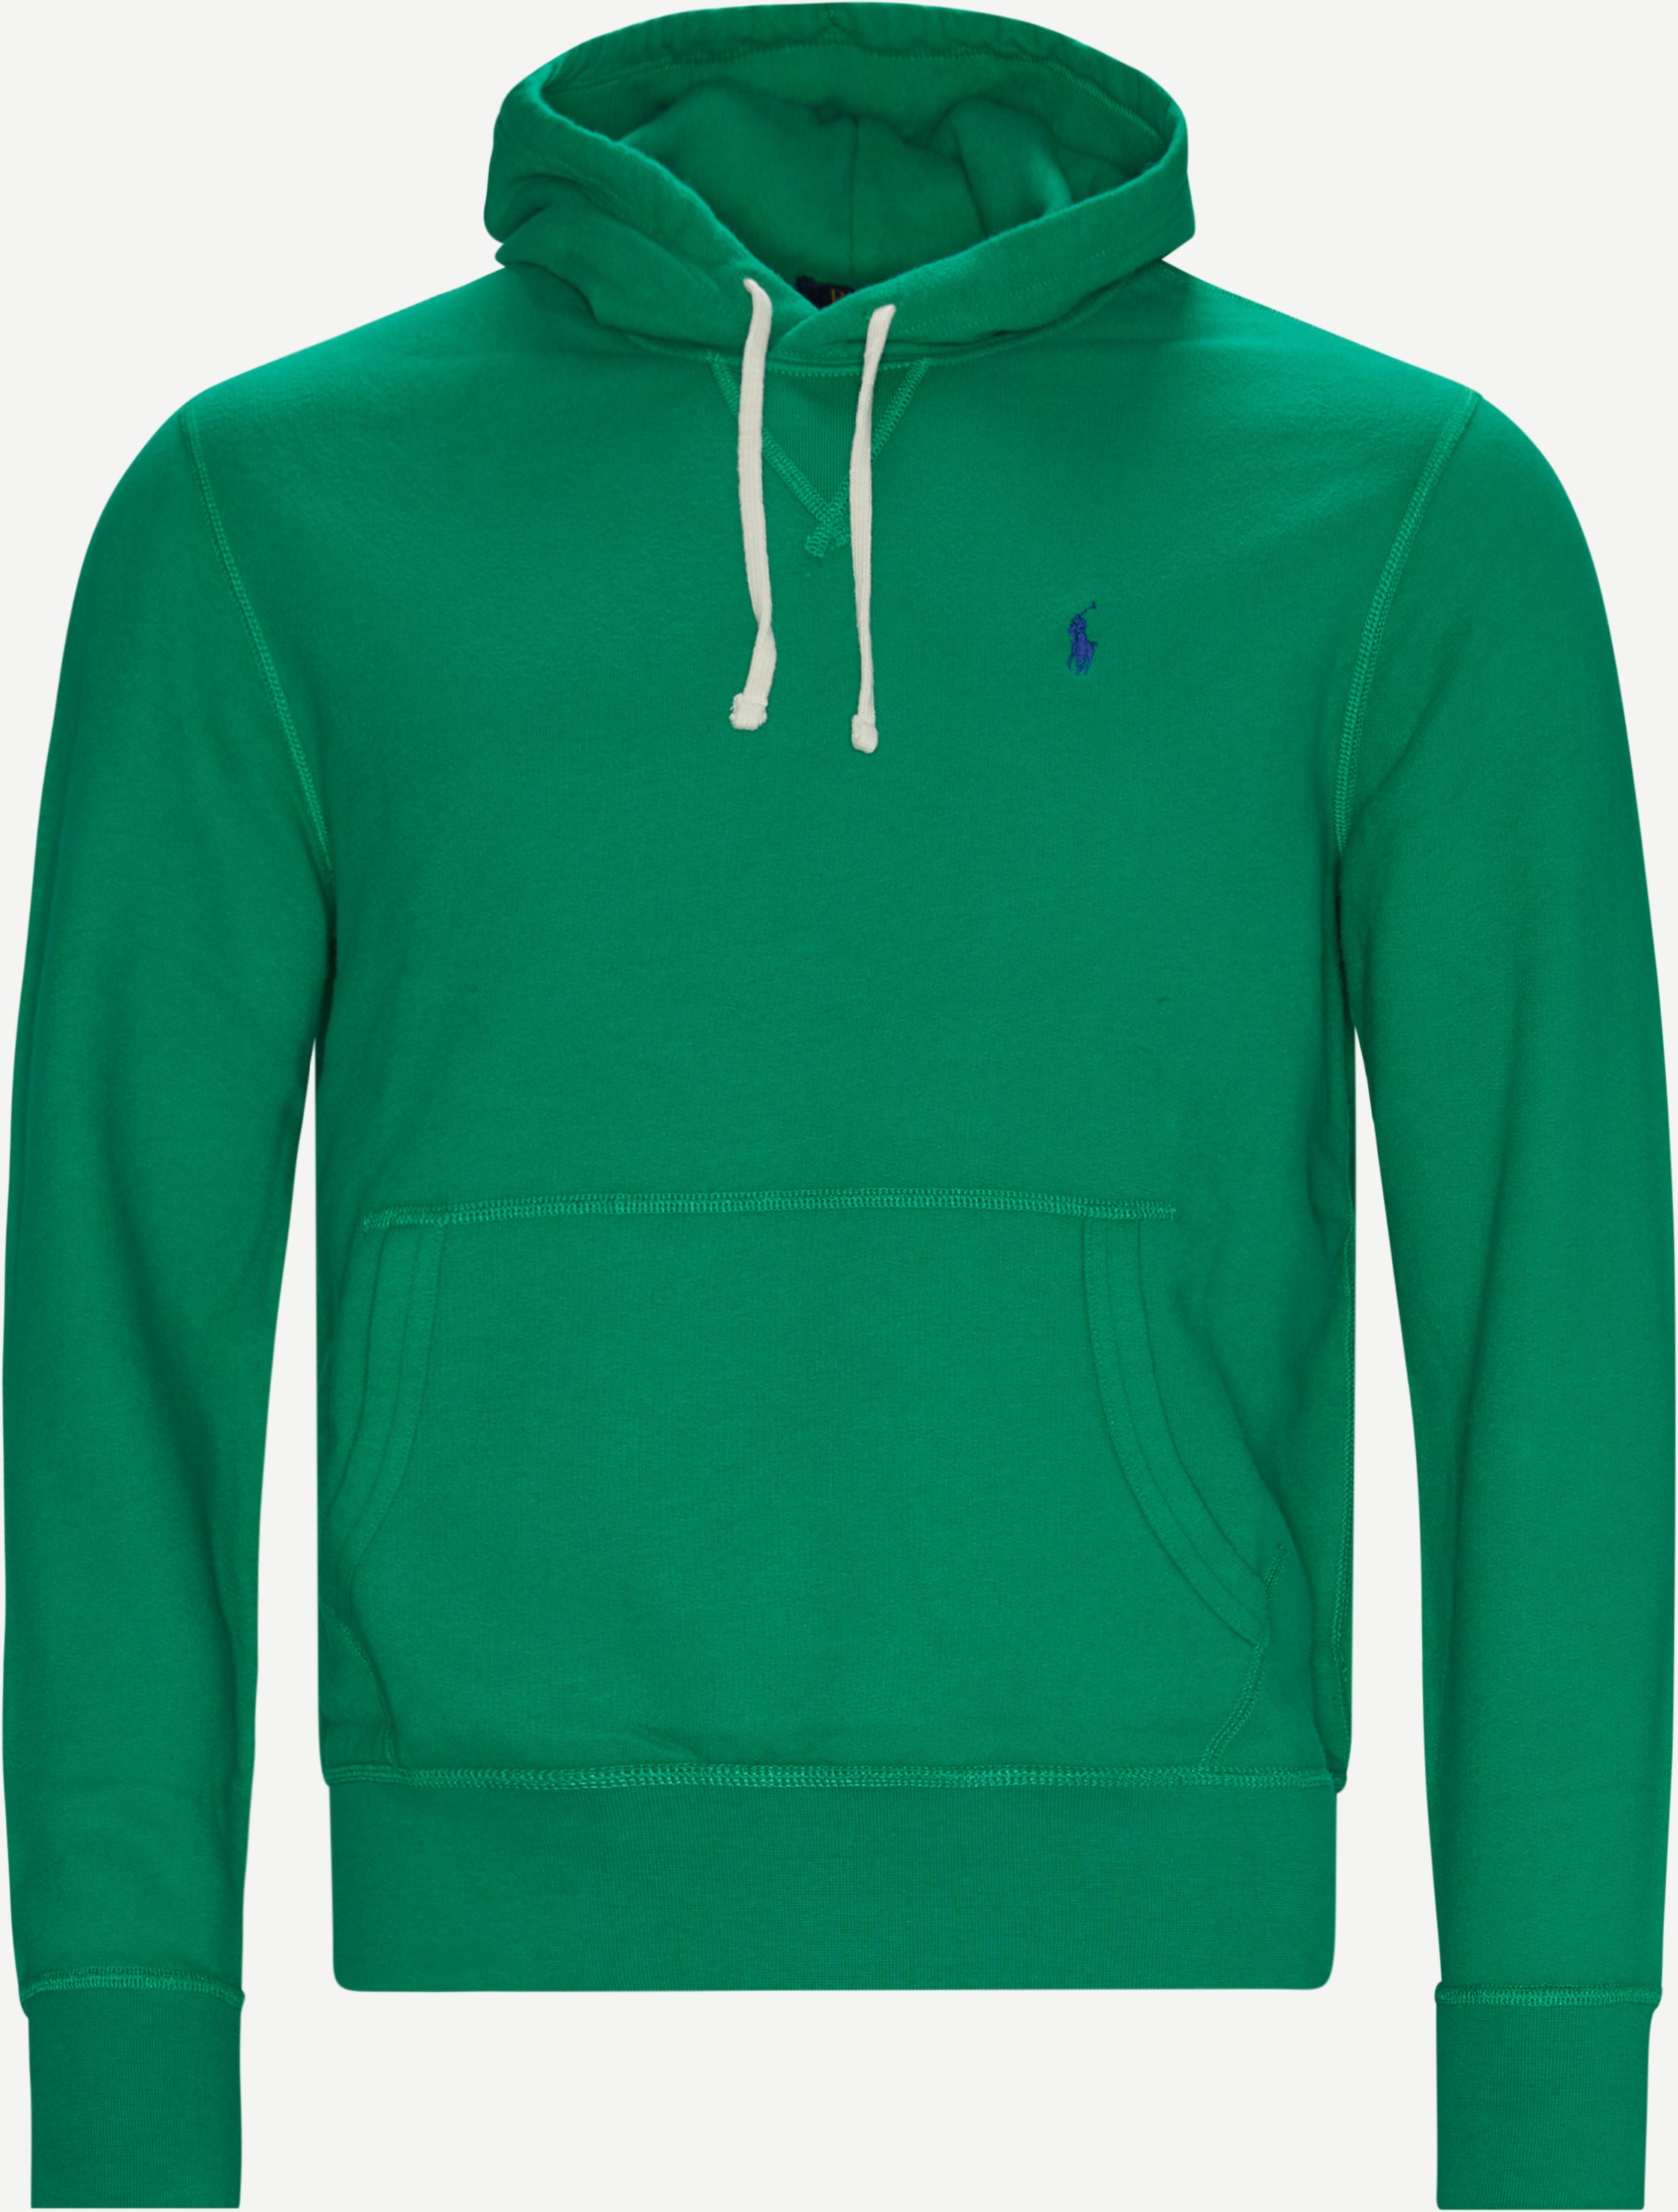 Huvtröja - Sweatshirts - Regular fit - Grön